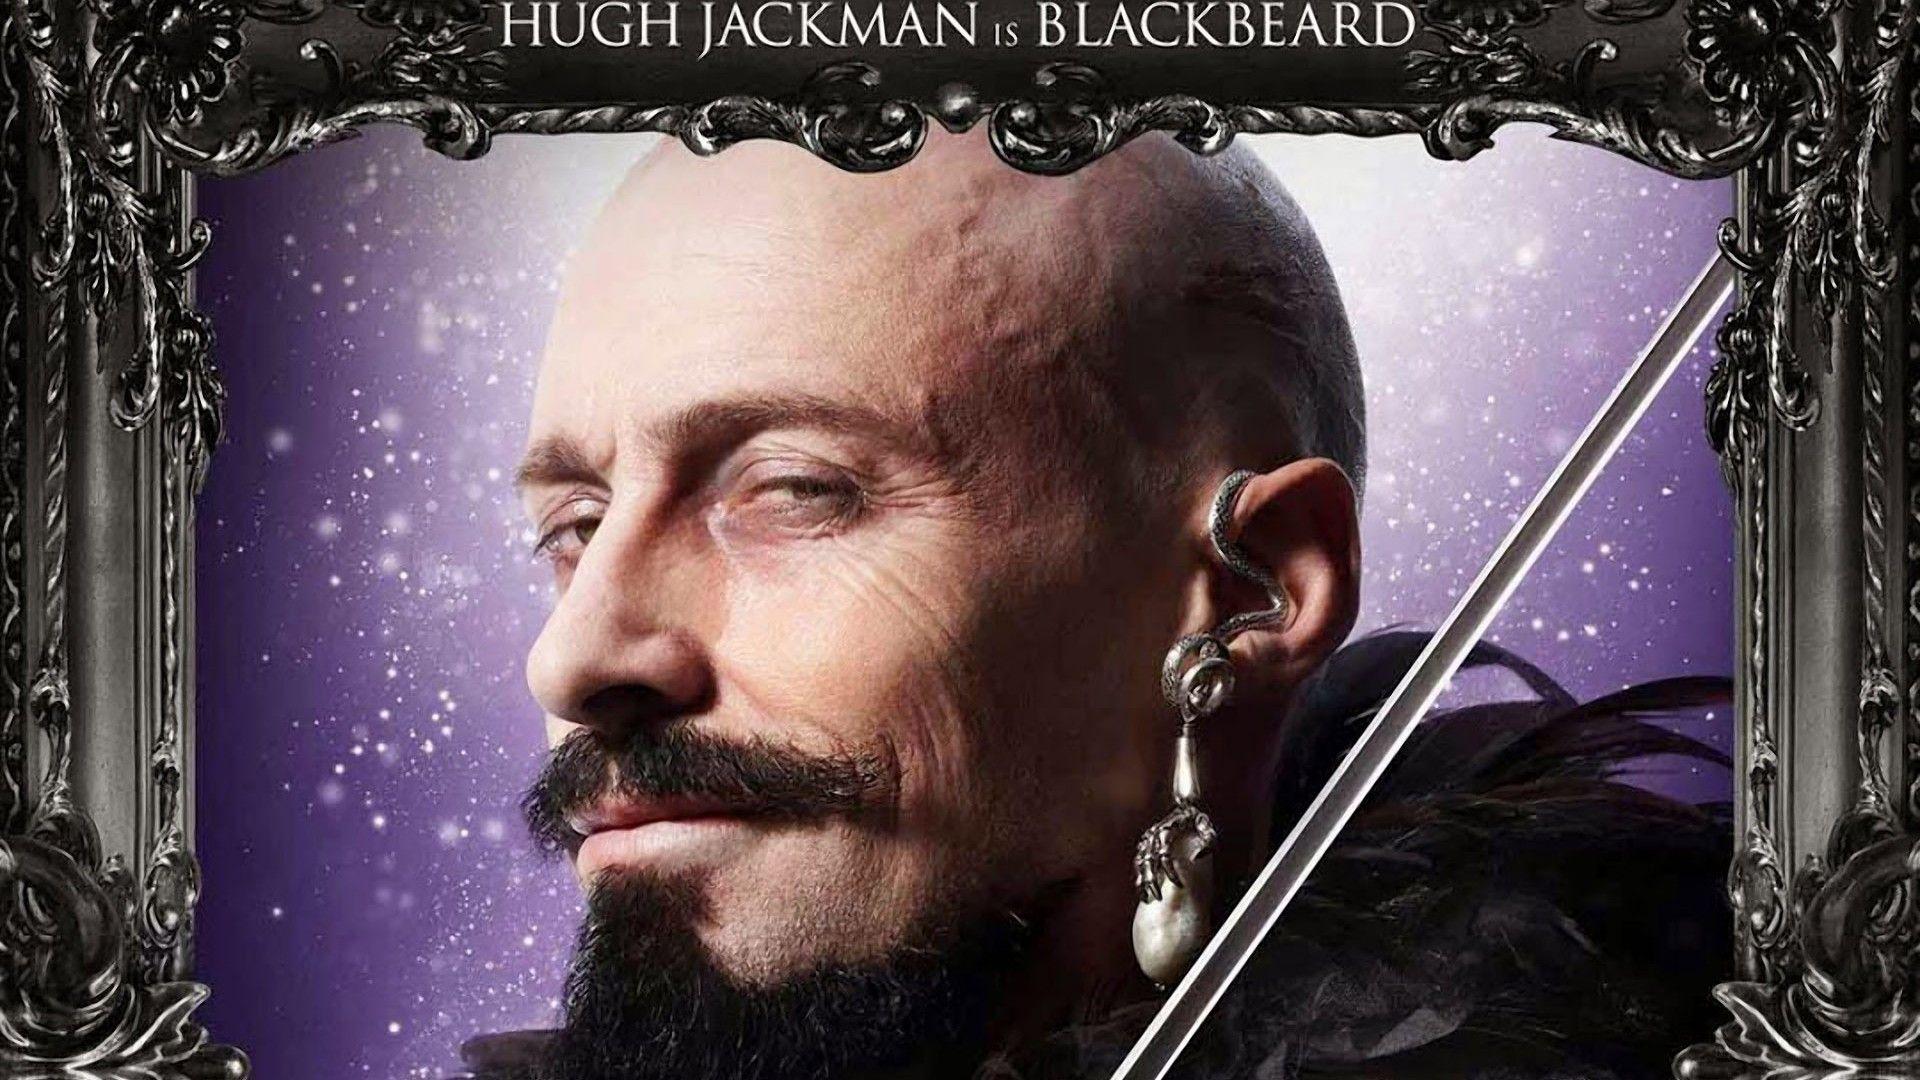 Hugh Jackman as Blackbeard in Pan Movie Wallpaper Wide or HD